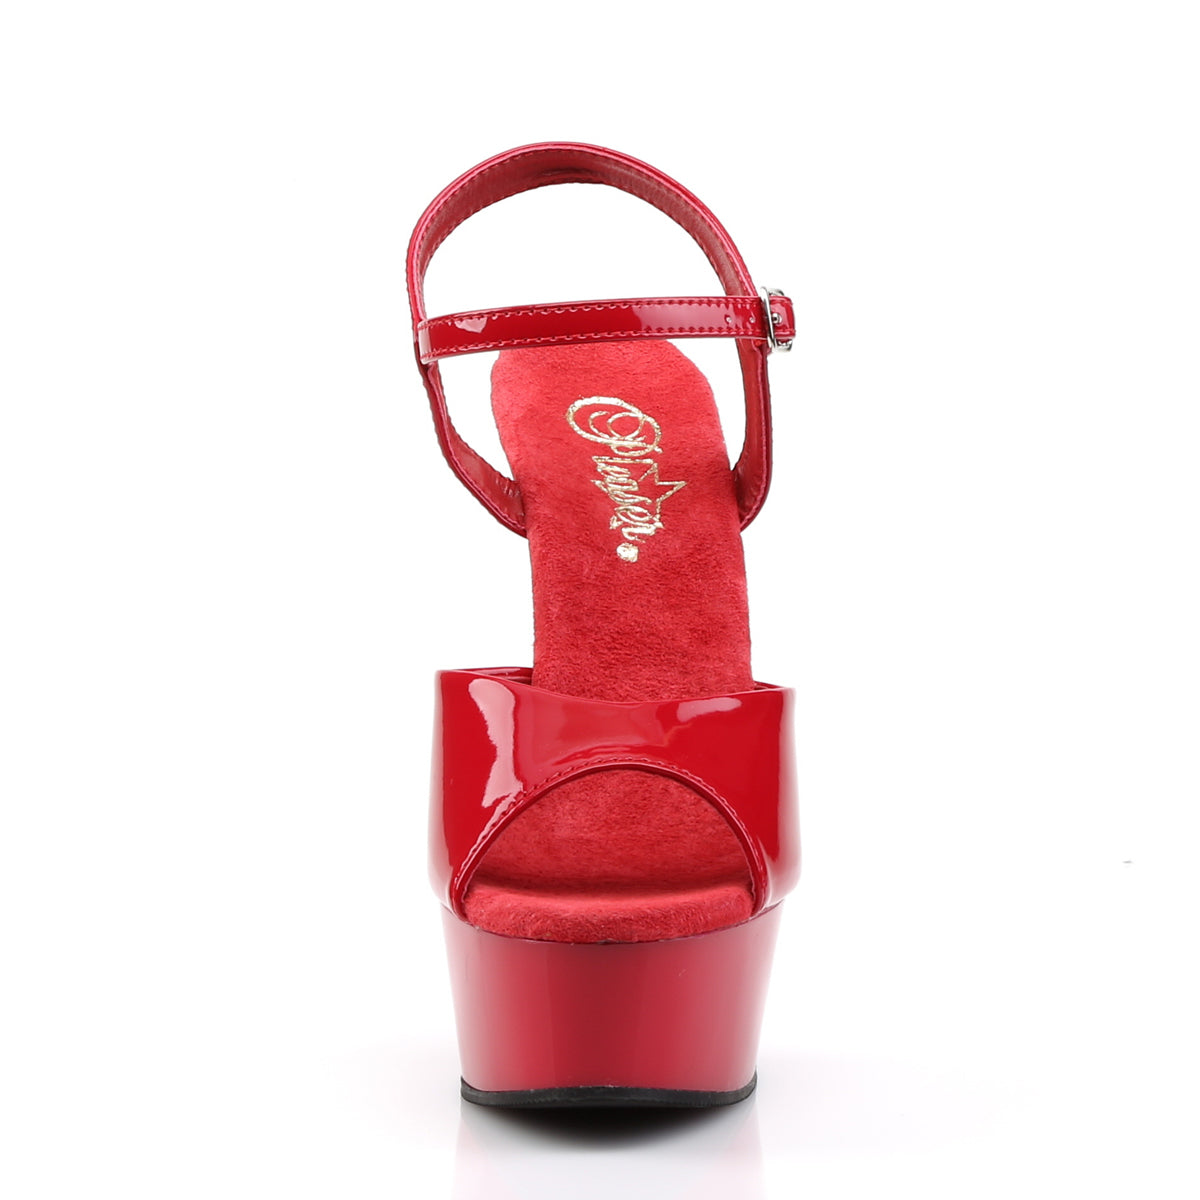 DELIGHT-609 Pleaser 6 Inch Heel Red Pole Dancing Platforms-Pleaser- Sexy Shoes Alternative Footwear